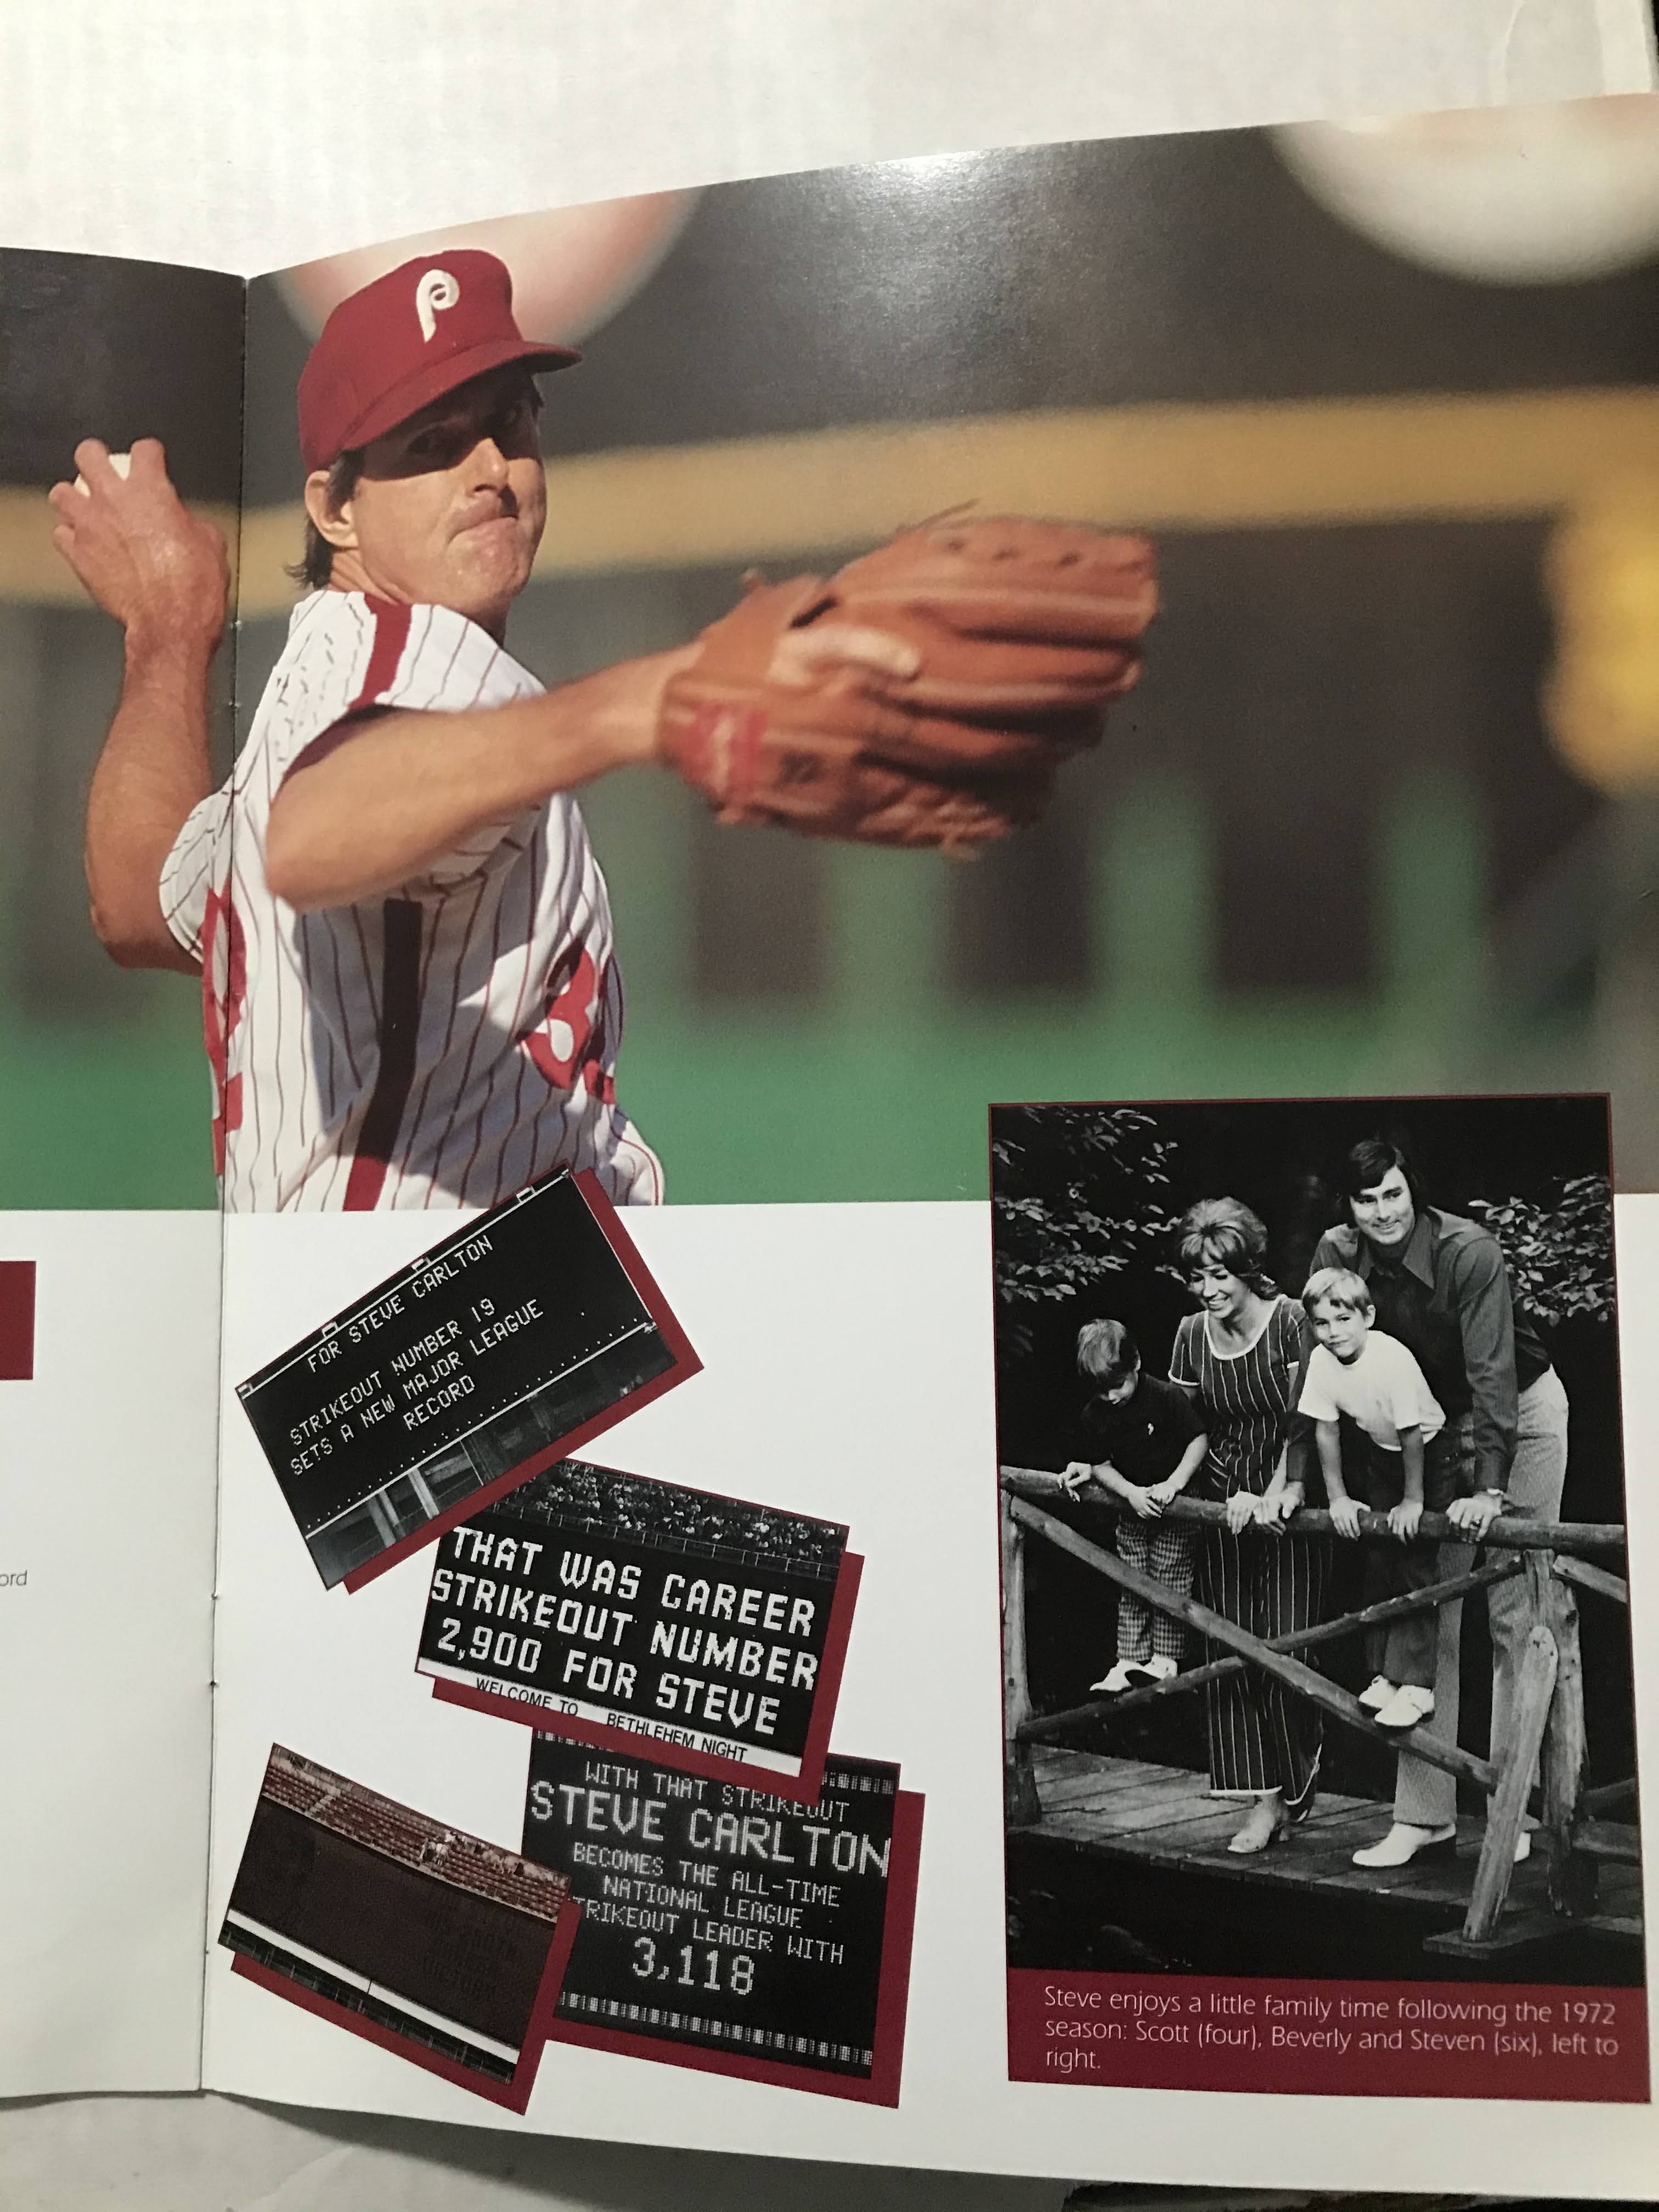 Baseball Cards Come to Life!: 1989 Steve Carlton Night program